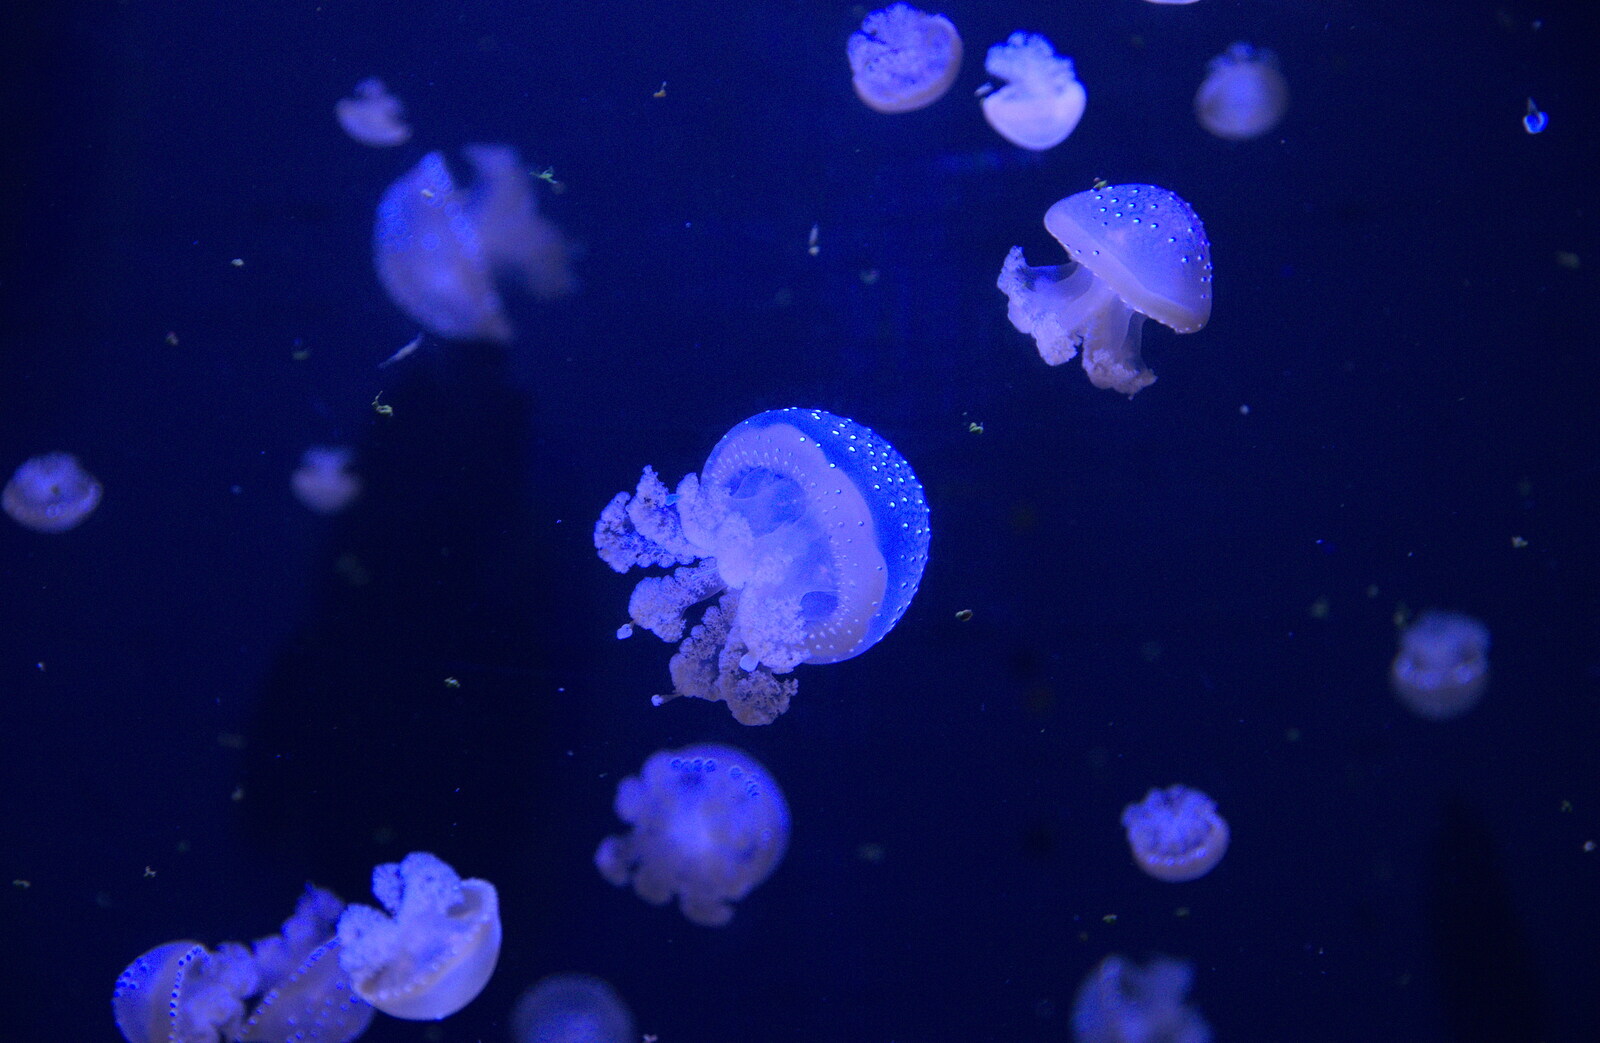 Jellyfish blob around from L'Aquarium de Barcelona, Port Vell, Catalonia, Spain - 23rd October 2017